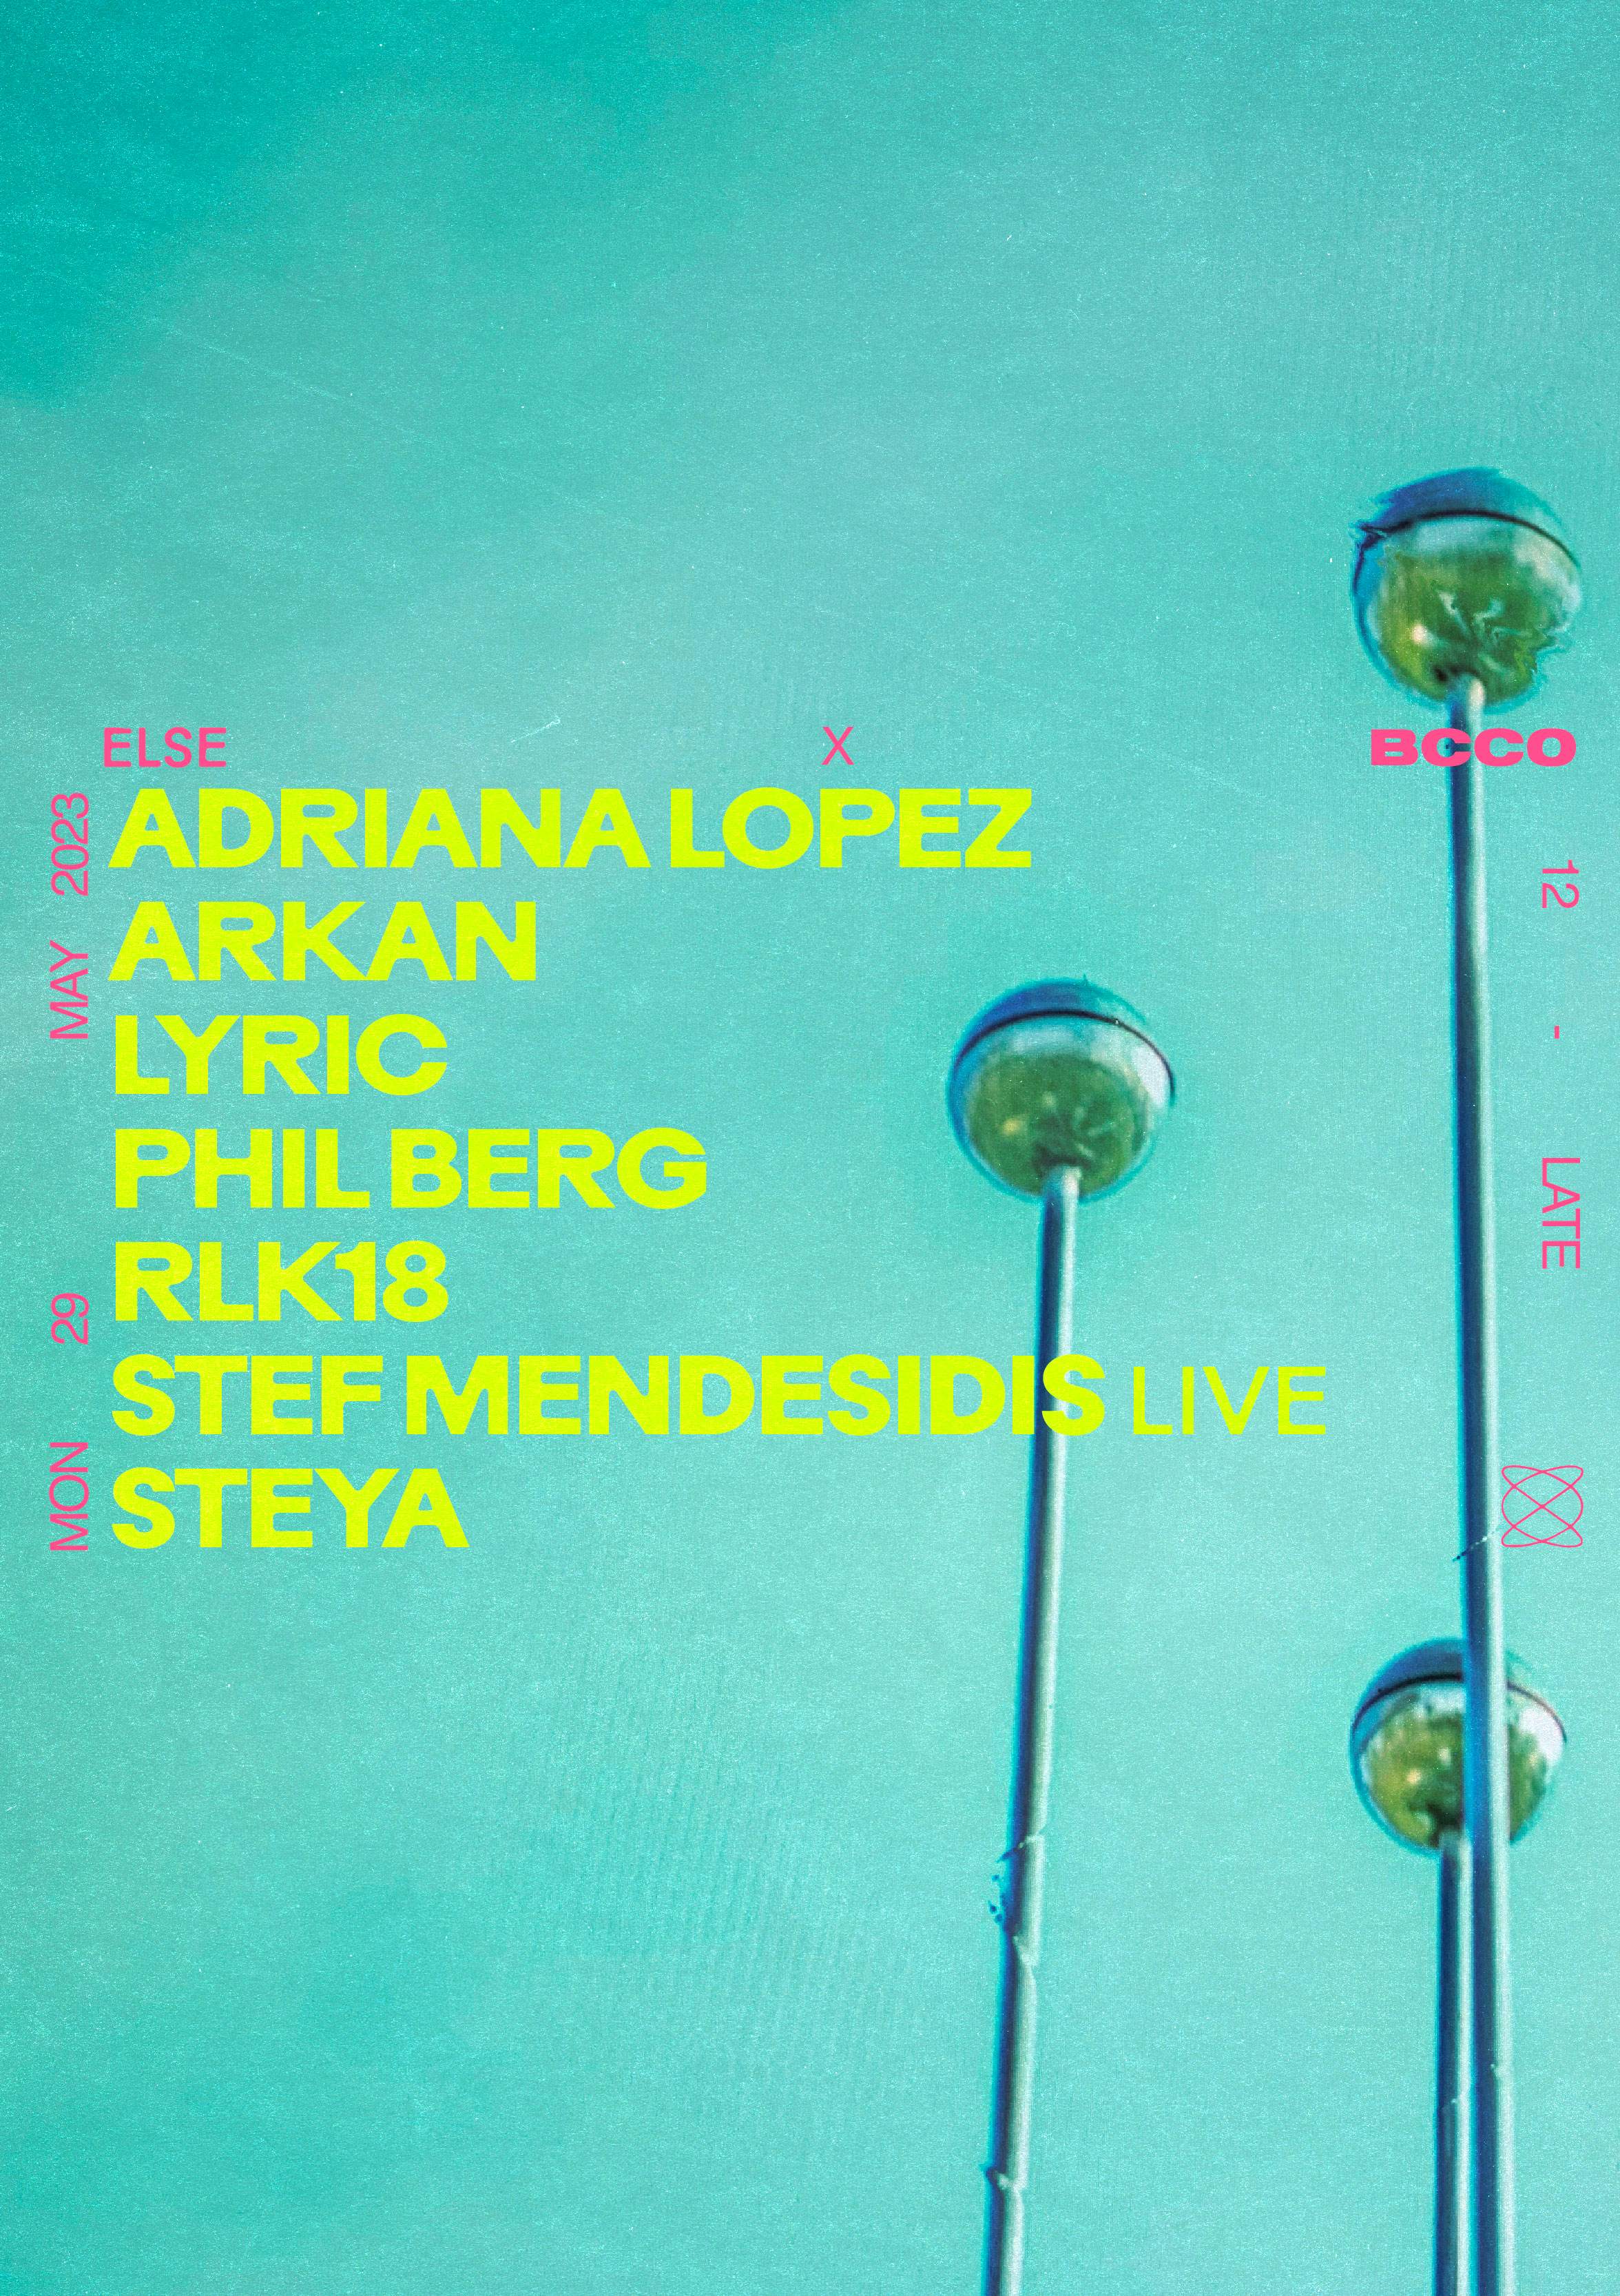 Else Open Air x BCCO: Adriana Lopez, Stef Mendesidis (Live), Lyric, STEYA, Phil Berg  - フライヤー表